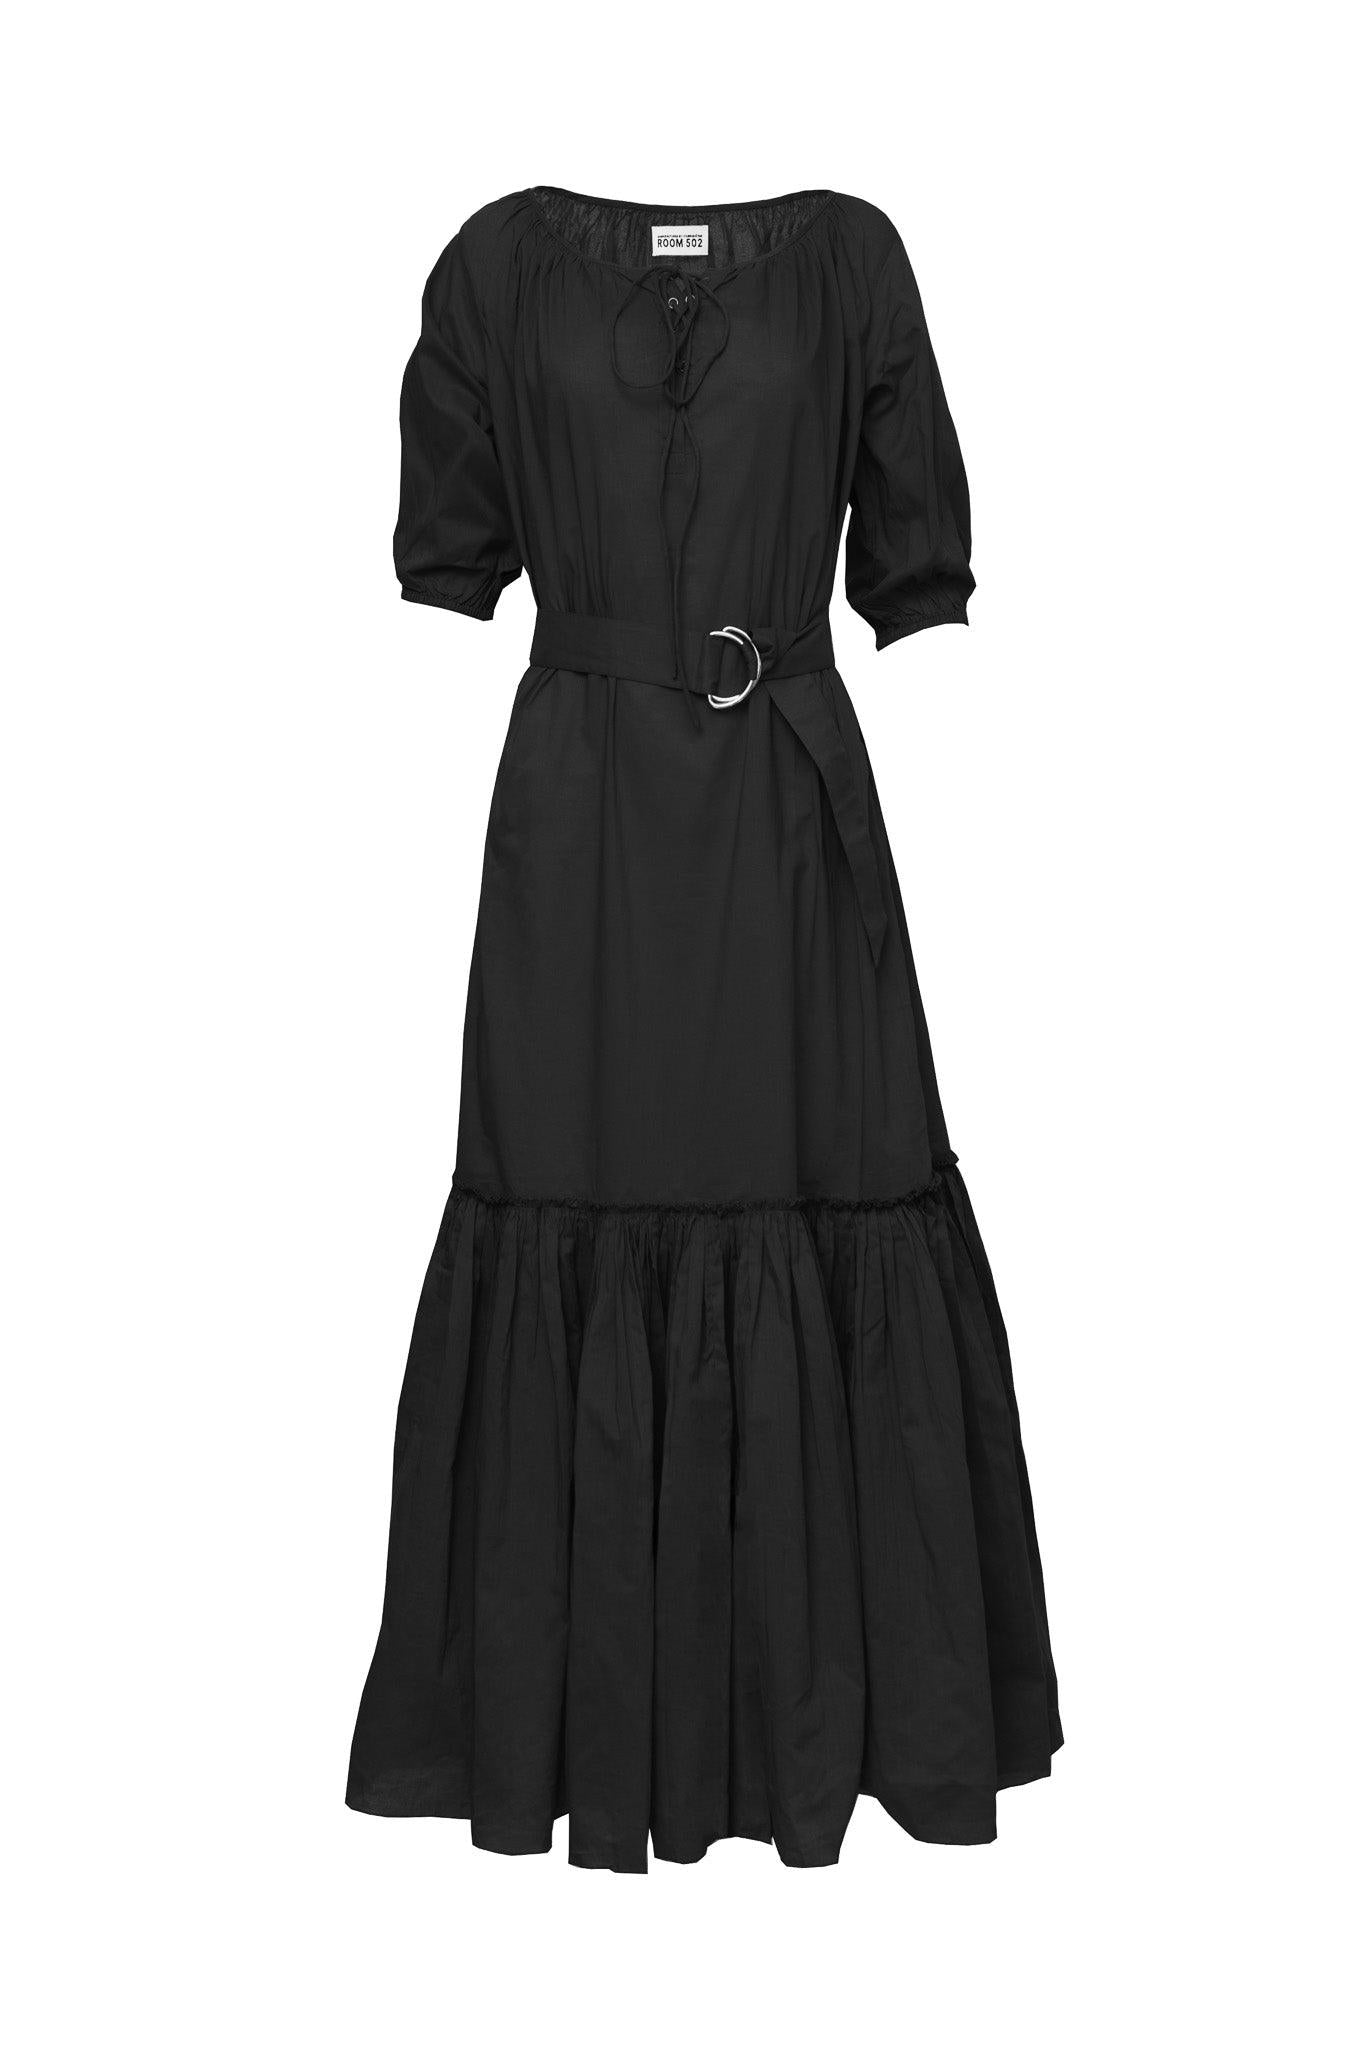 RESORT BEACH DRESS MODEL 8 LENA - BLACK - Room 502